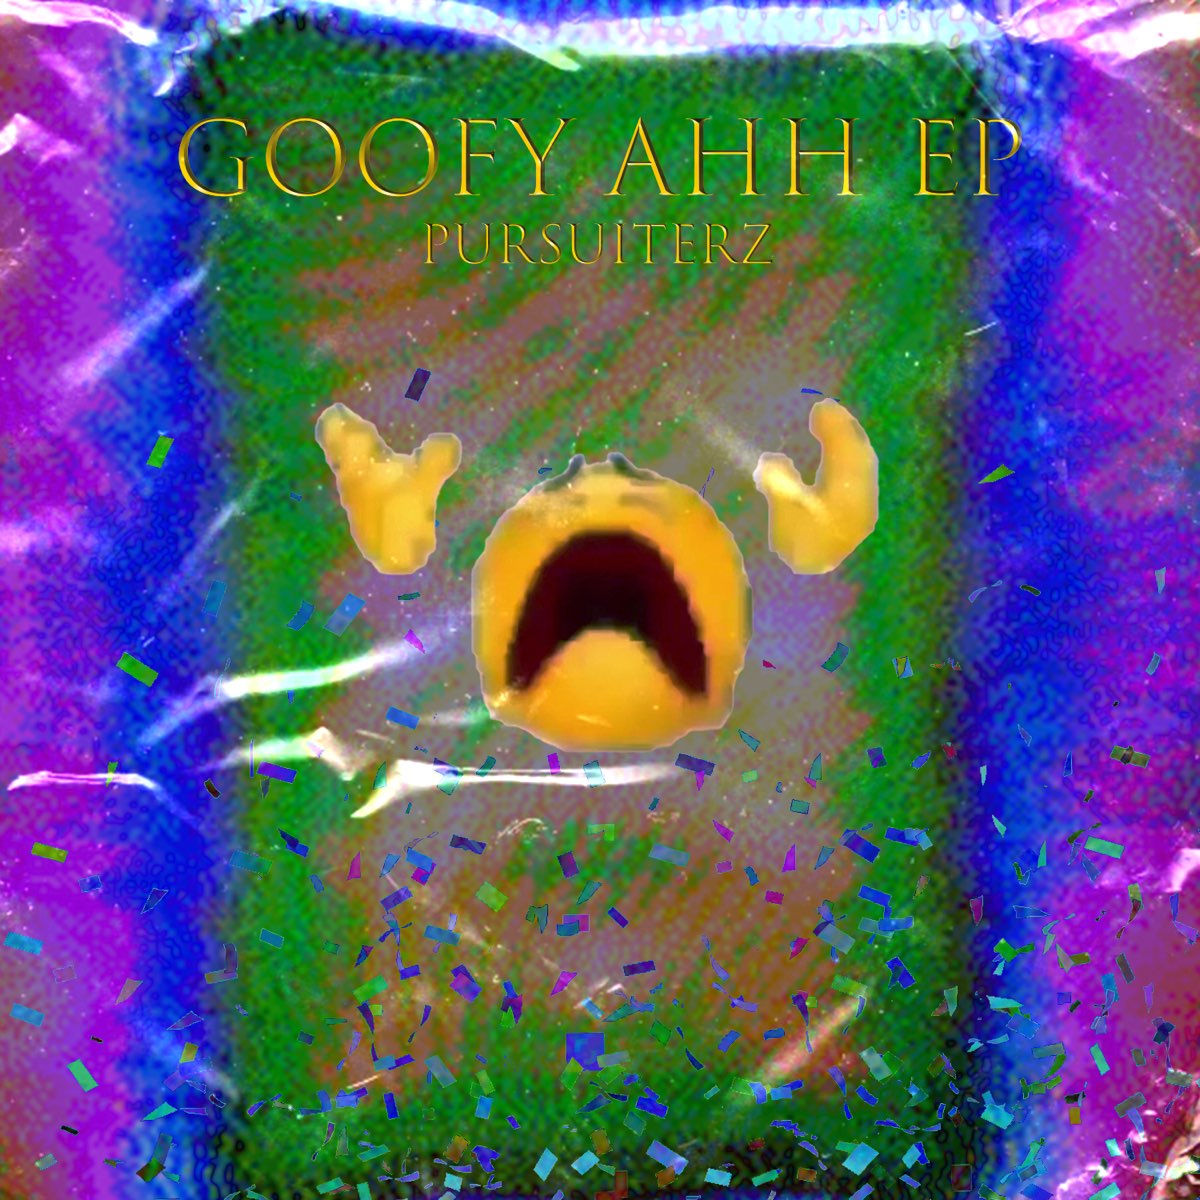 goofy ahh sounds 💀🖐 - playlist by erva